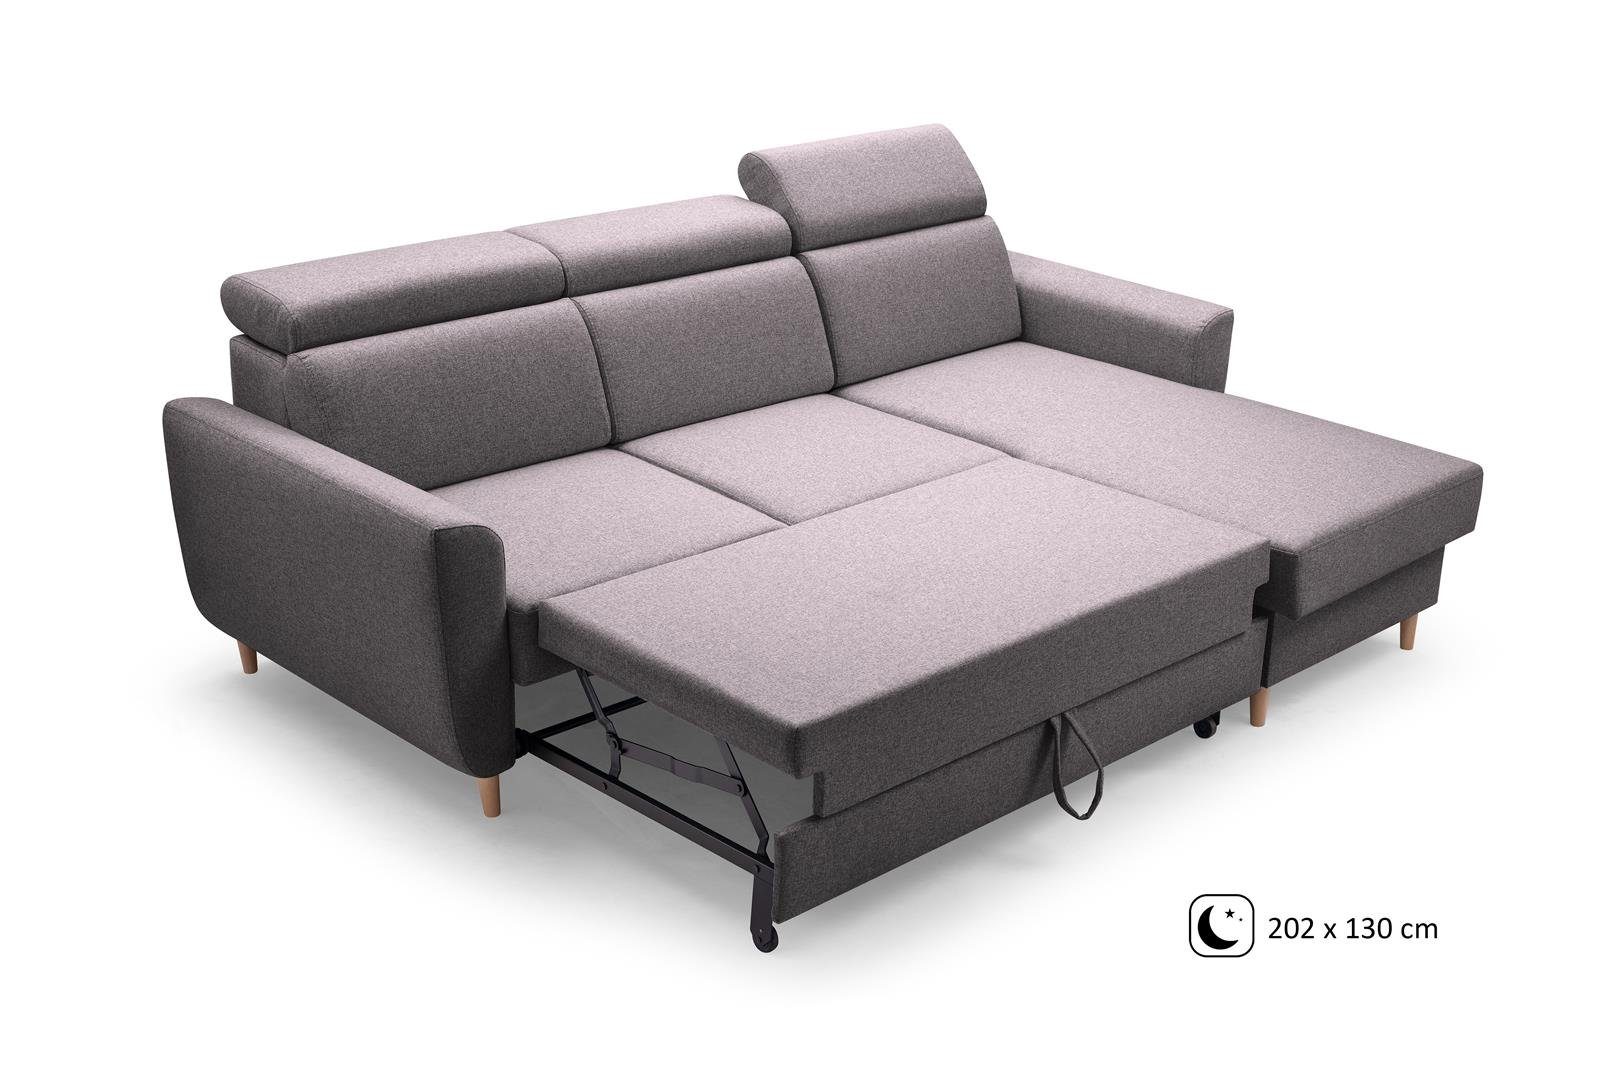 Sofa mit Schlaffunktion Beautysofa Ecksofa universelle dunkelgrau GUSTAW Modern Couch Ecksofa